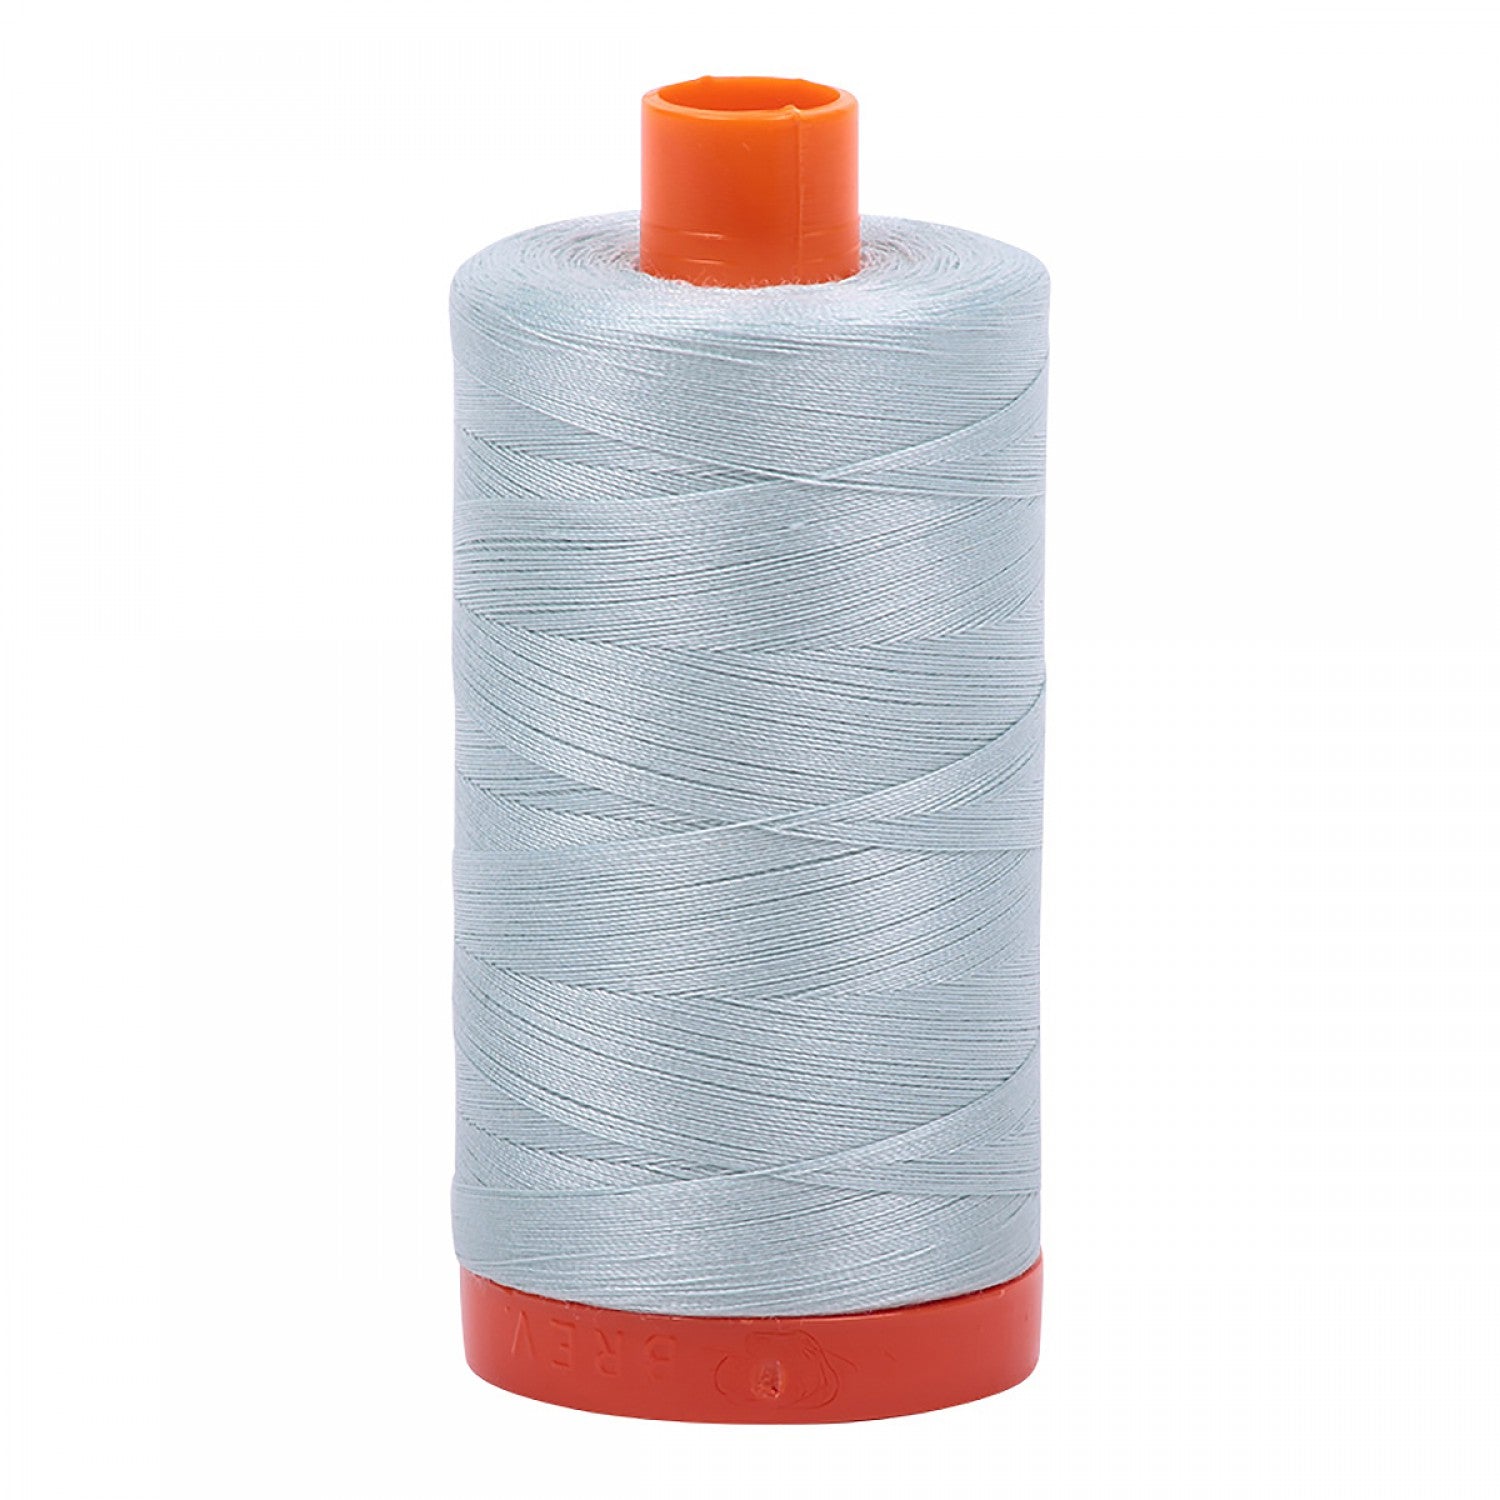 Aurifil Mako 50 wt Cotton Thread - 1422 yds - Light Grey Blue (5007)